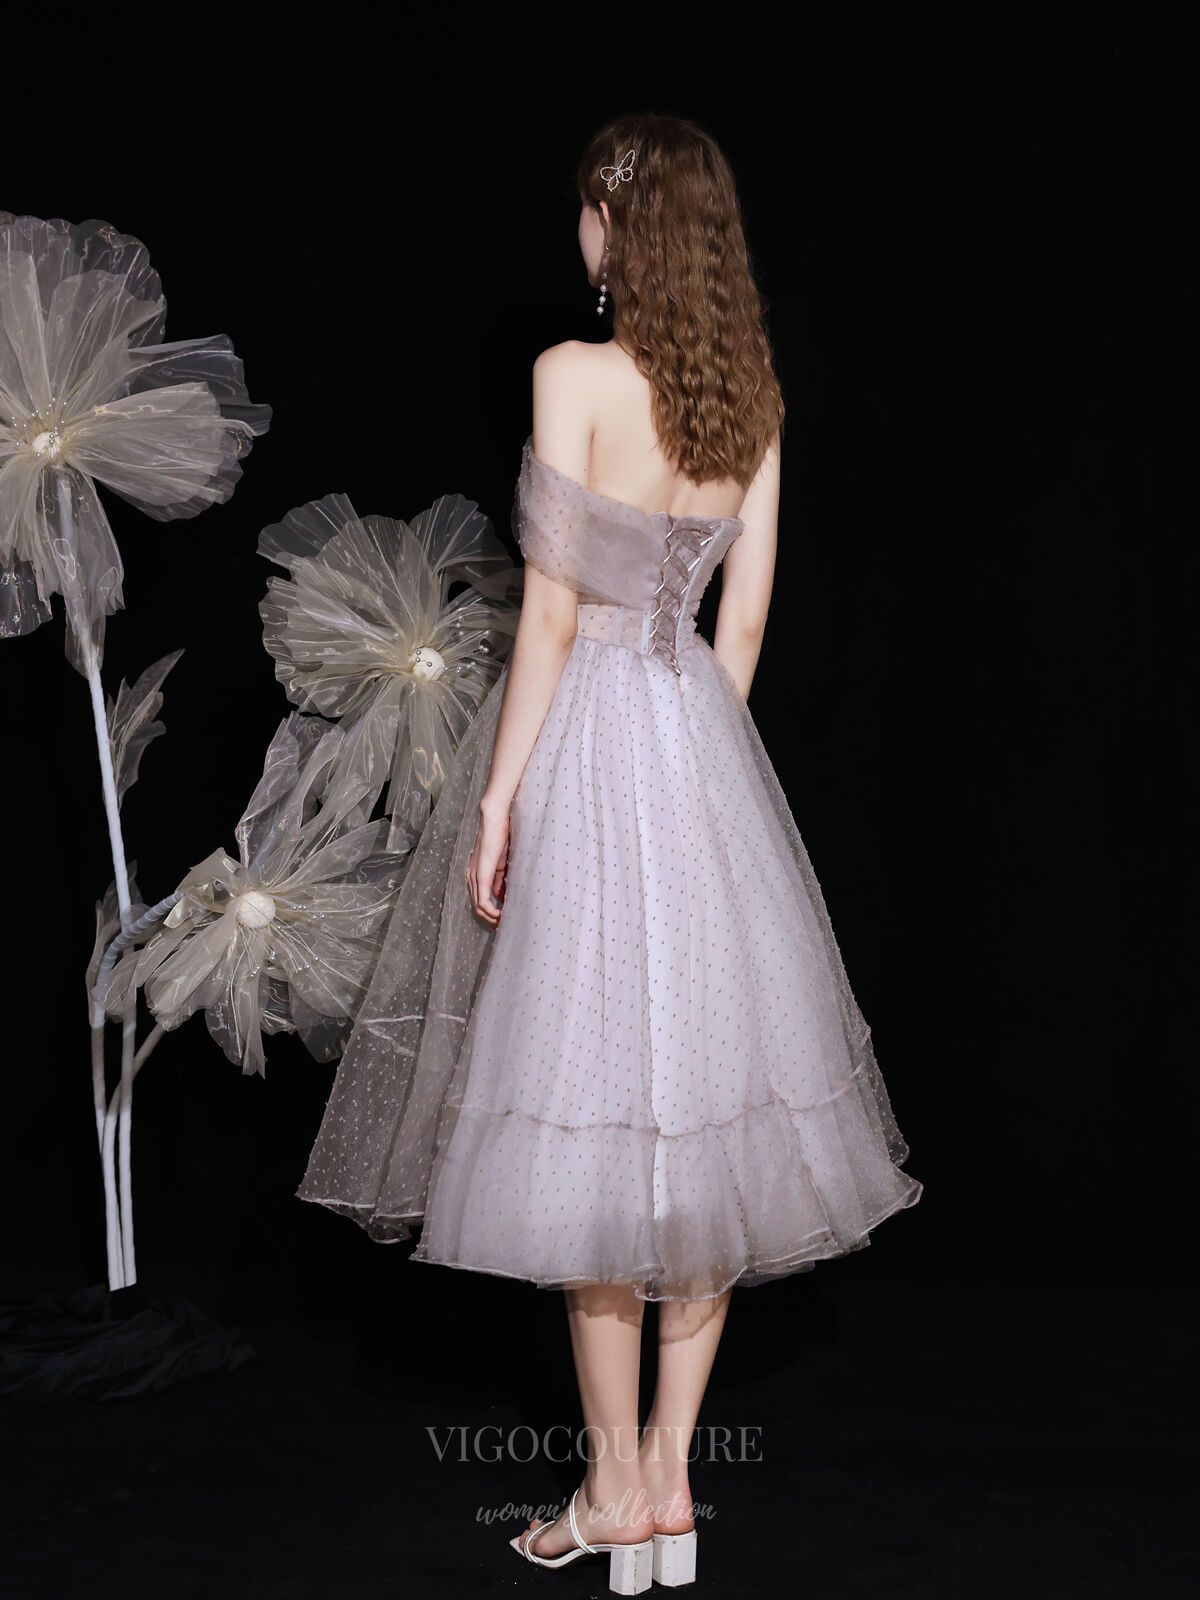 vigocouture-Mauve Strapless Tulle Prom Dress 20722-Prom Dresses-vigocouture-